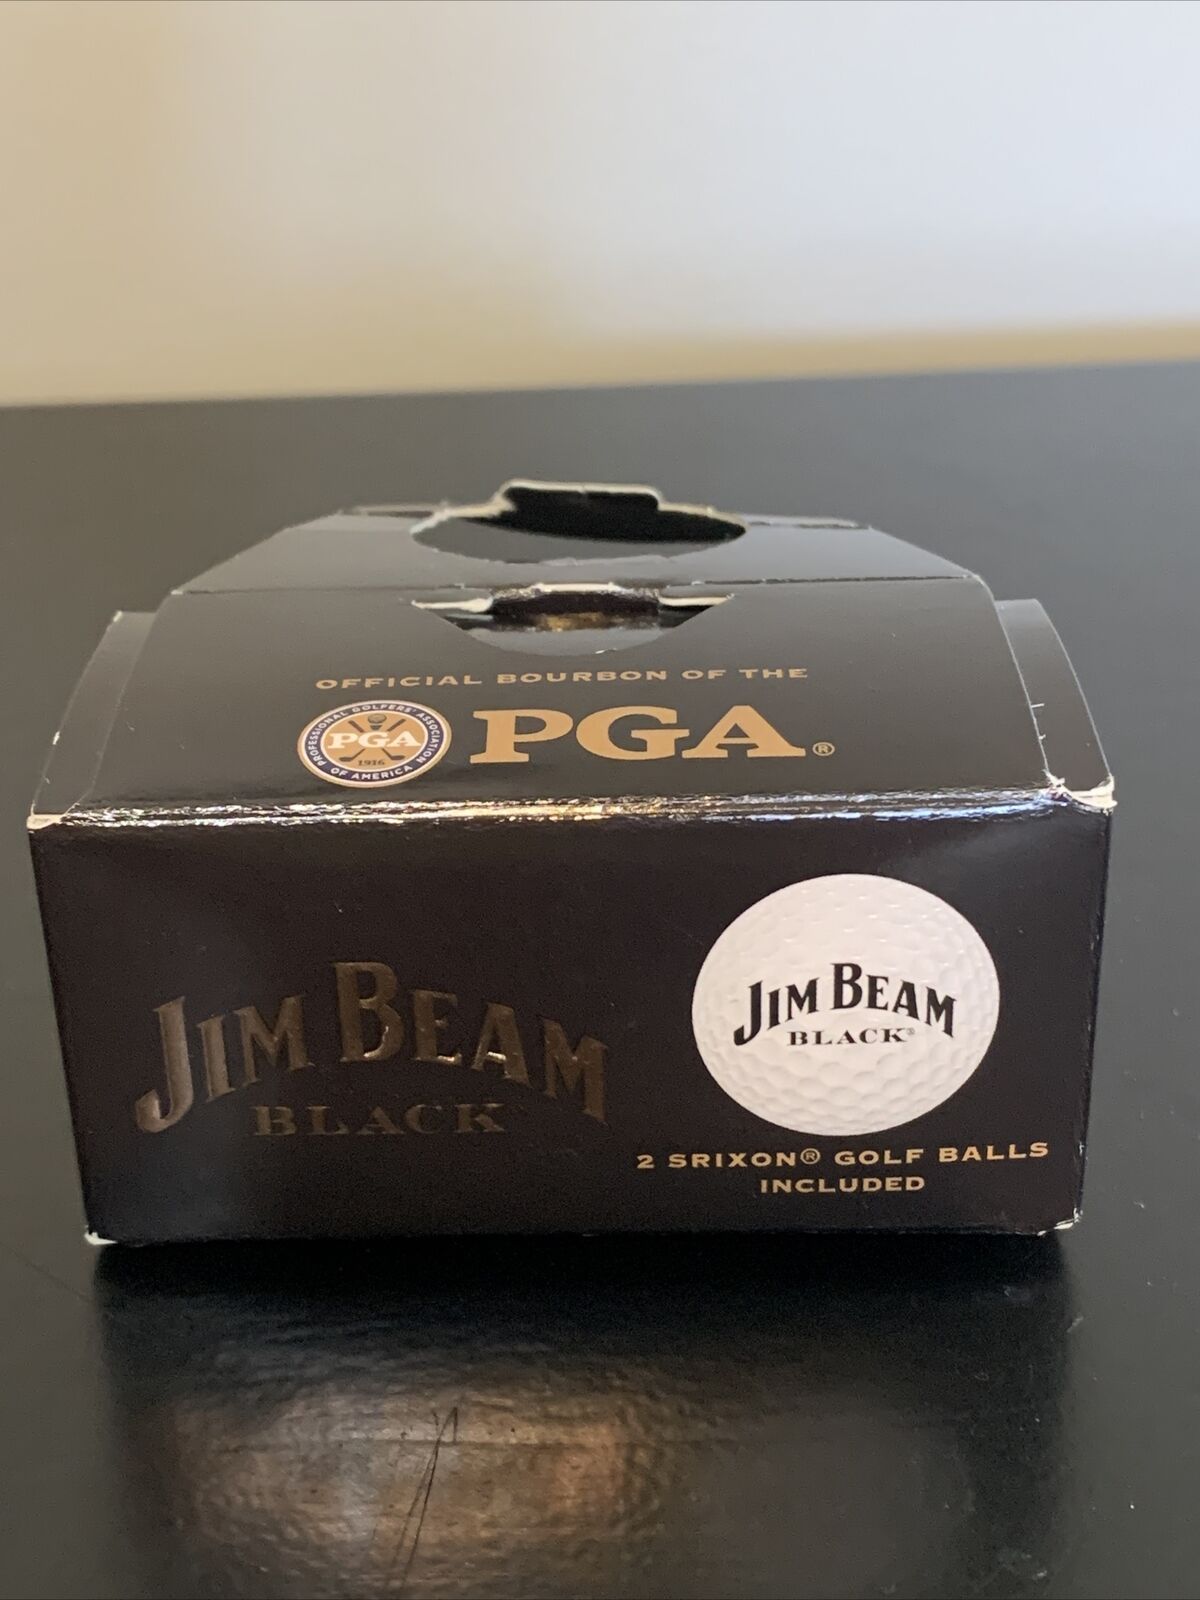 NEW Jim Beam Black 2 Srixon Golf Ball Bourbon Of The PGA Promotional Whiskey